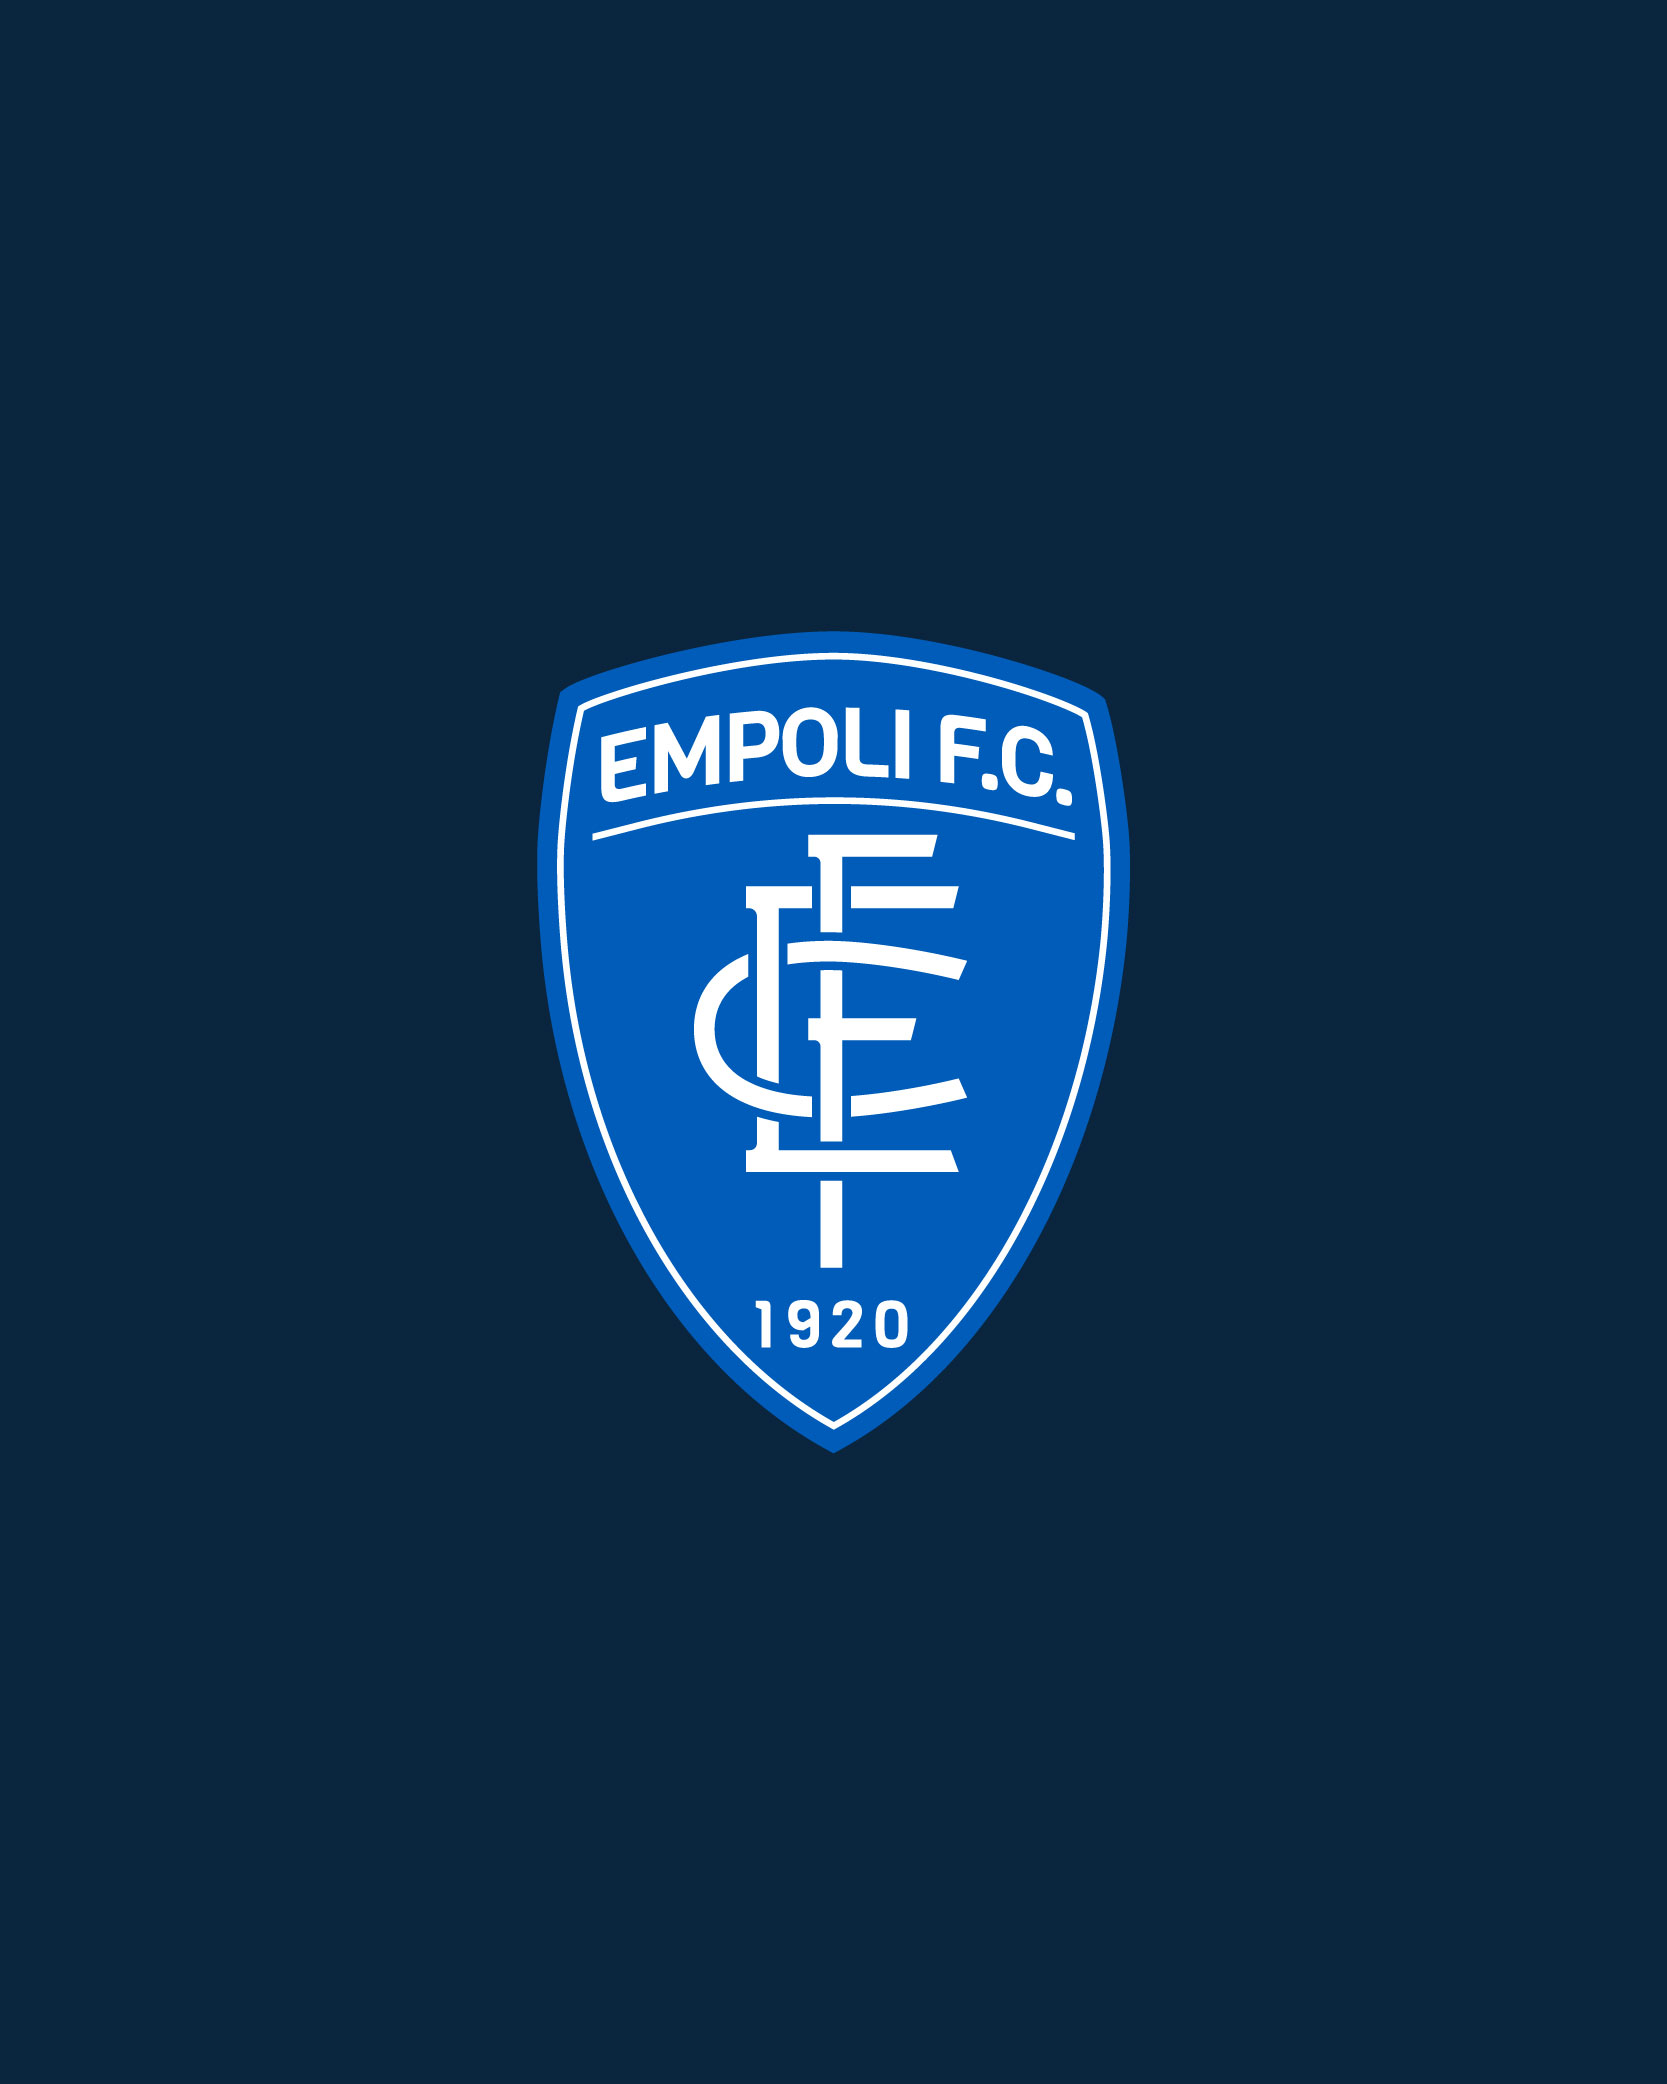 Empoli F.C. 1920